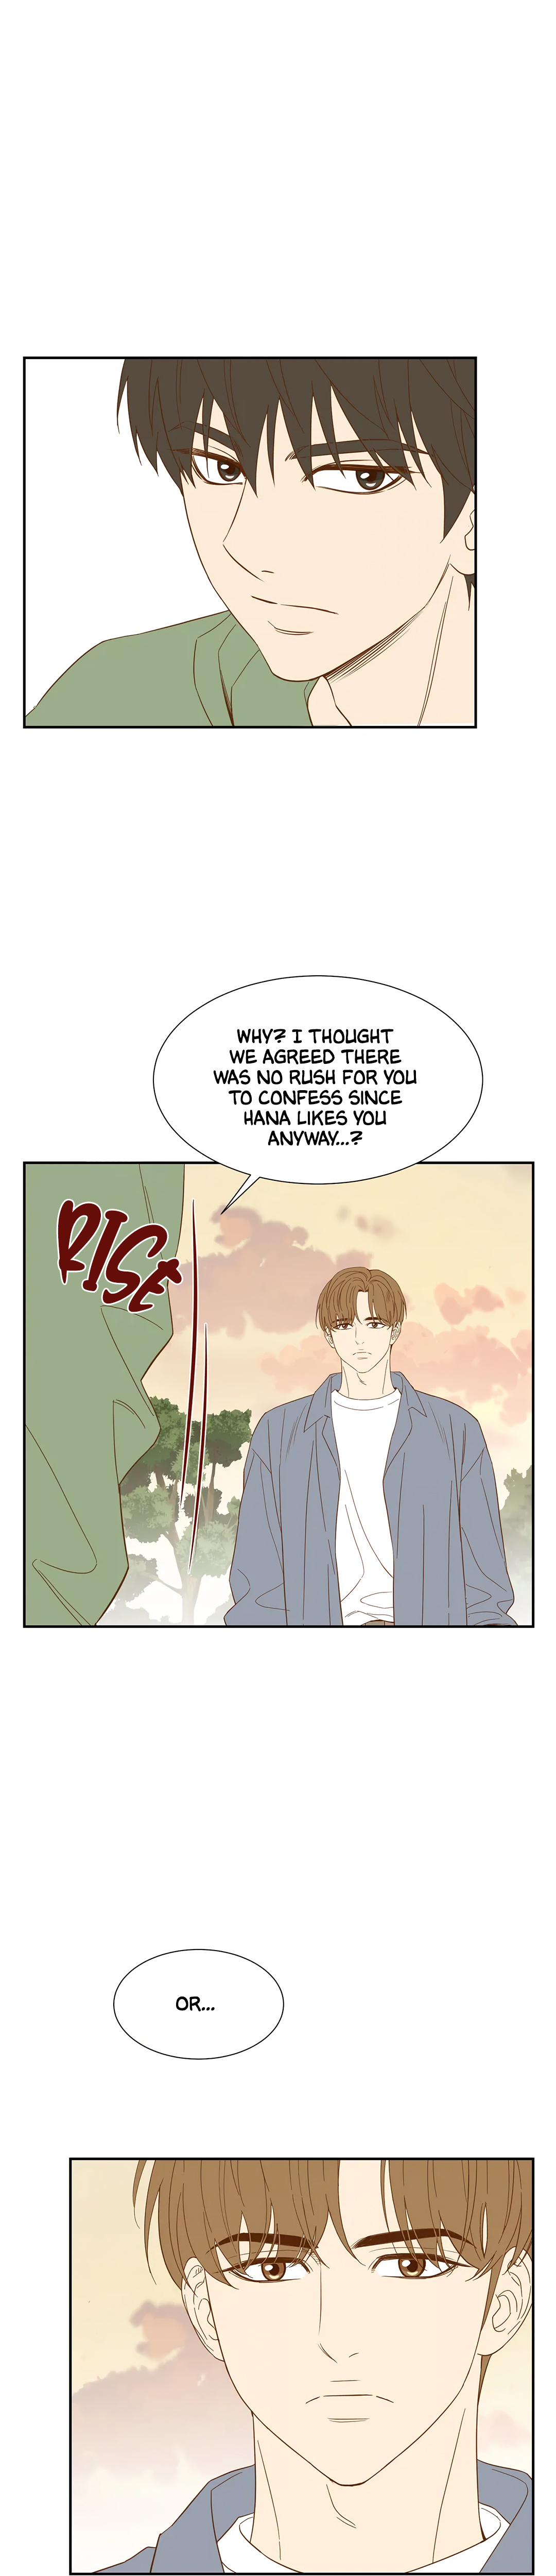 Hana’S Choice - Page 1